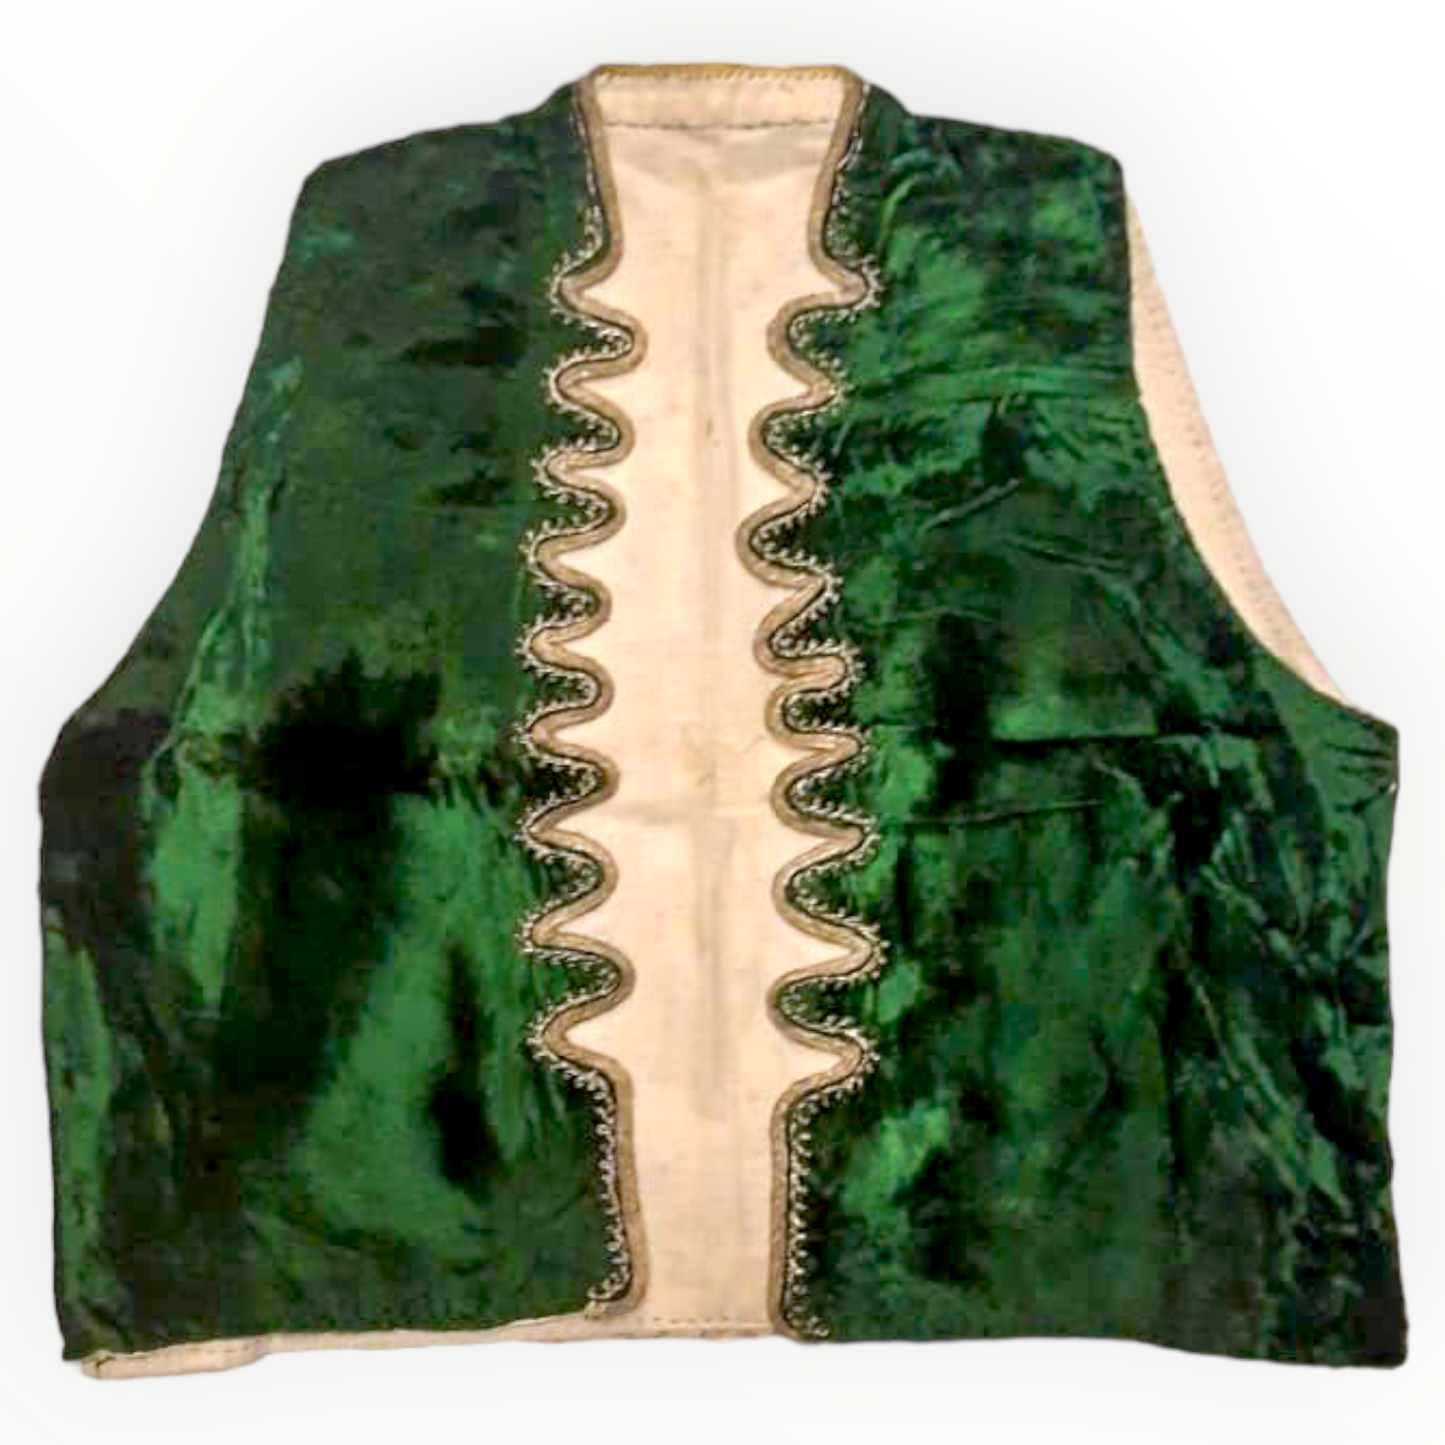 Antique Ottoman Anatolian Bindallı Cropped Vest - Turkish Folk Cepken